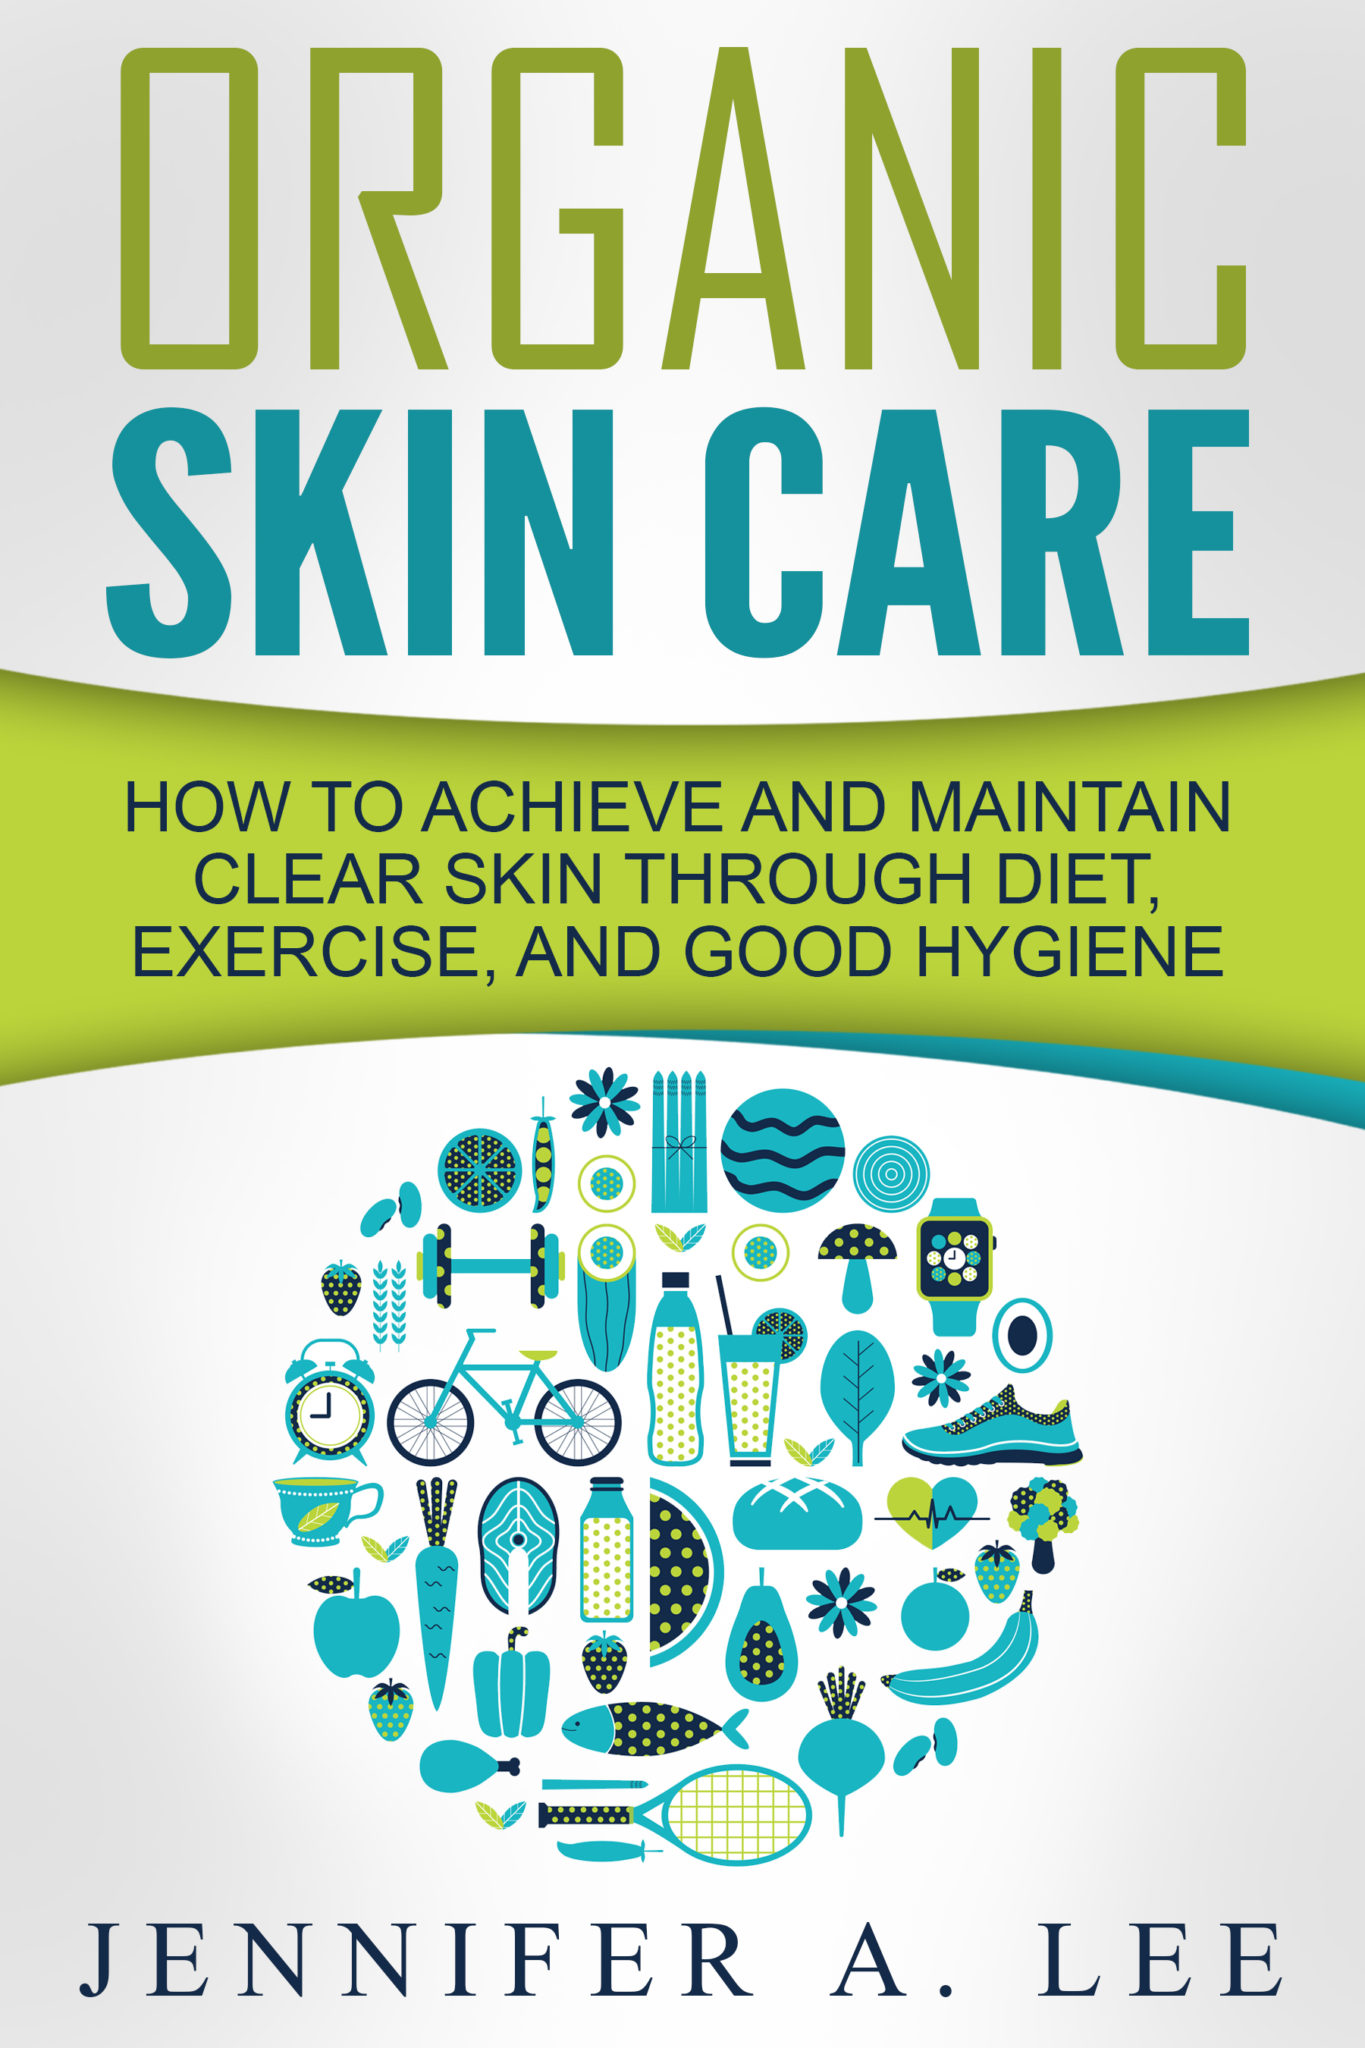 FREE: Organic Skin Care by Jennifer A. Lee